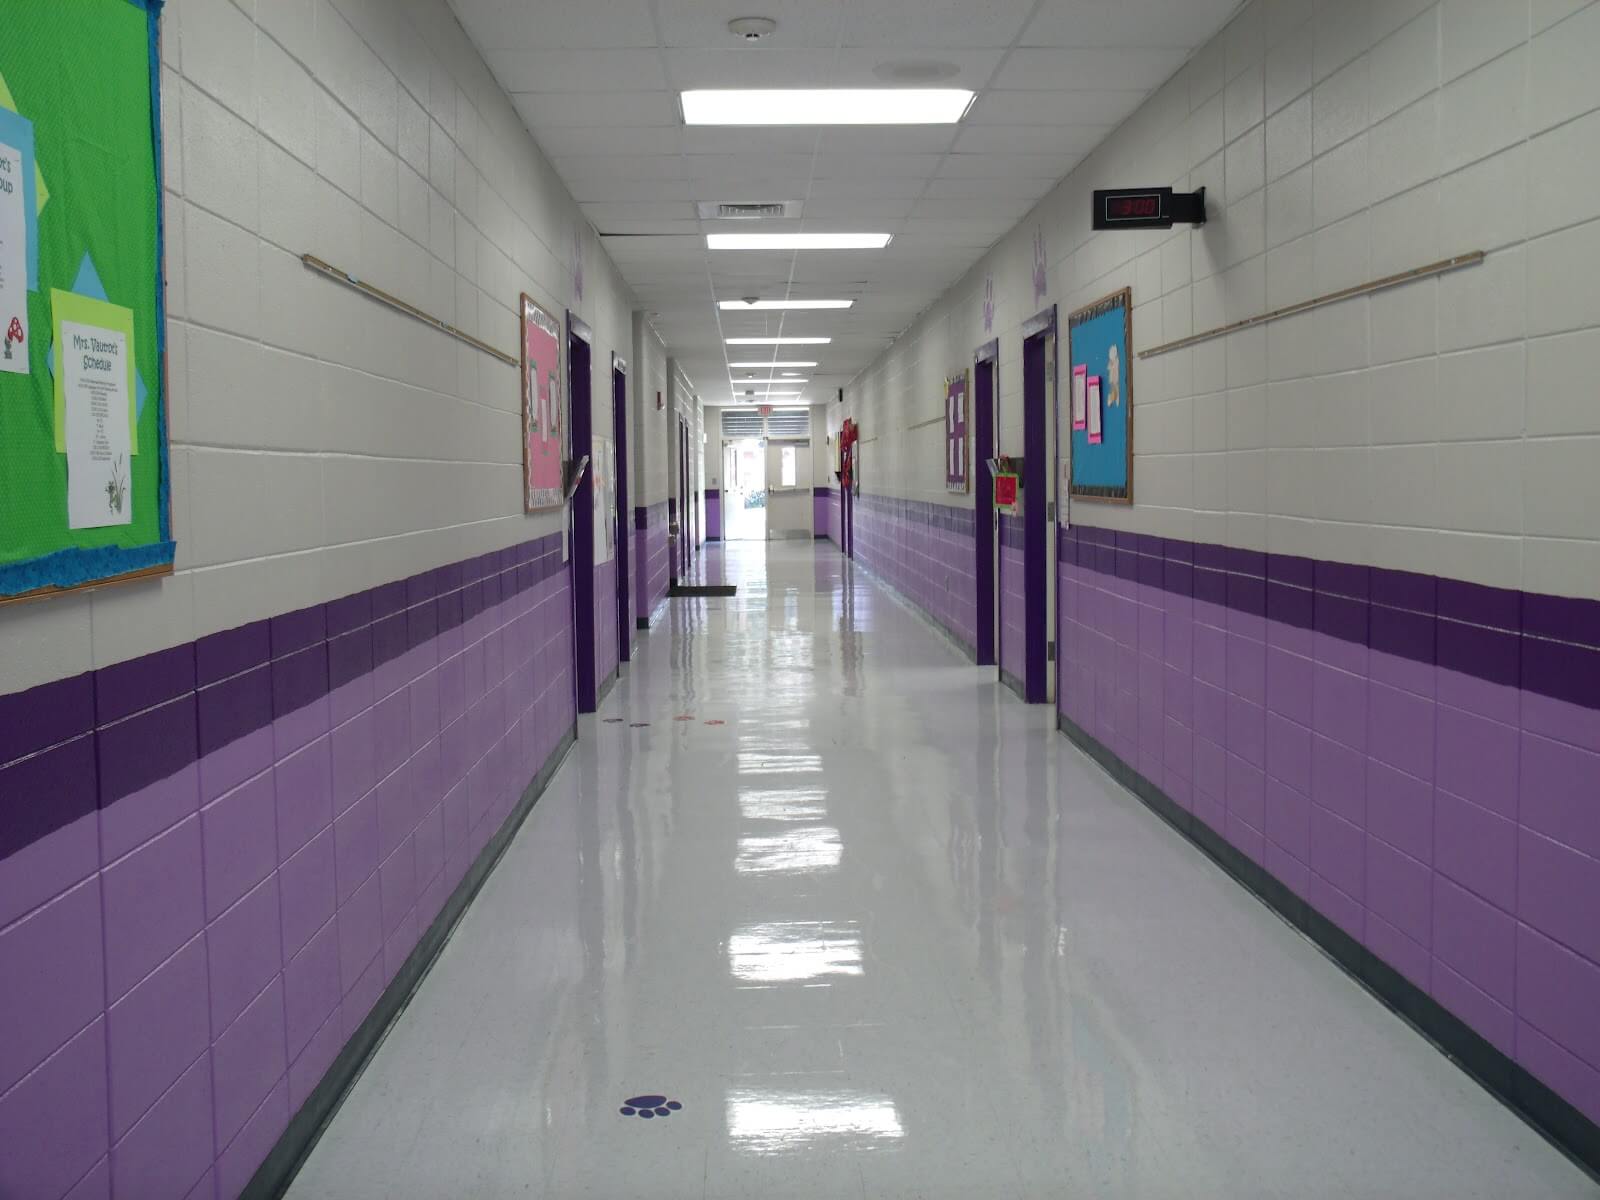 small hallway ideas